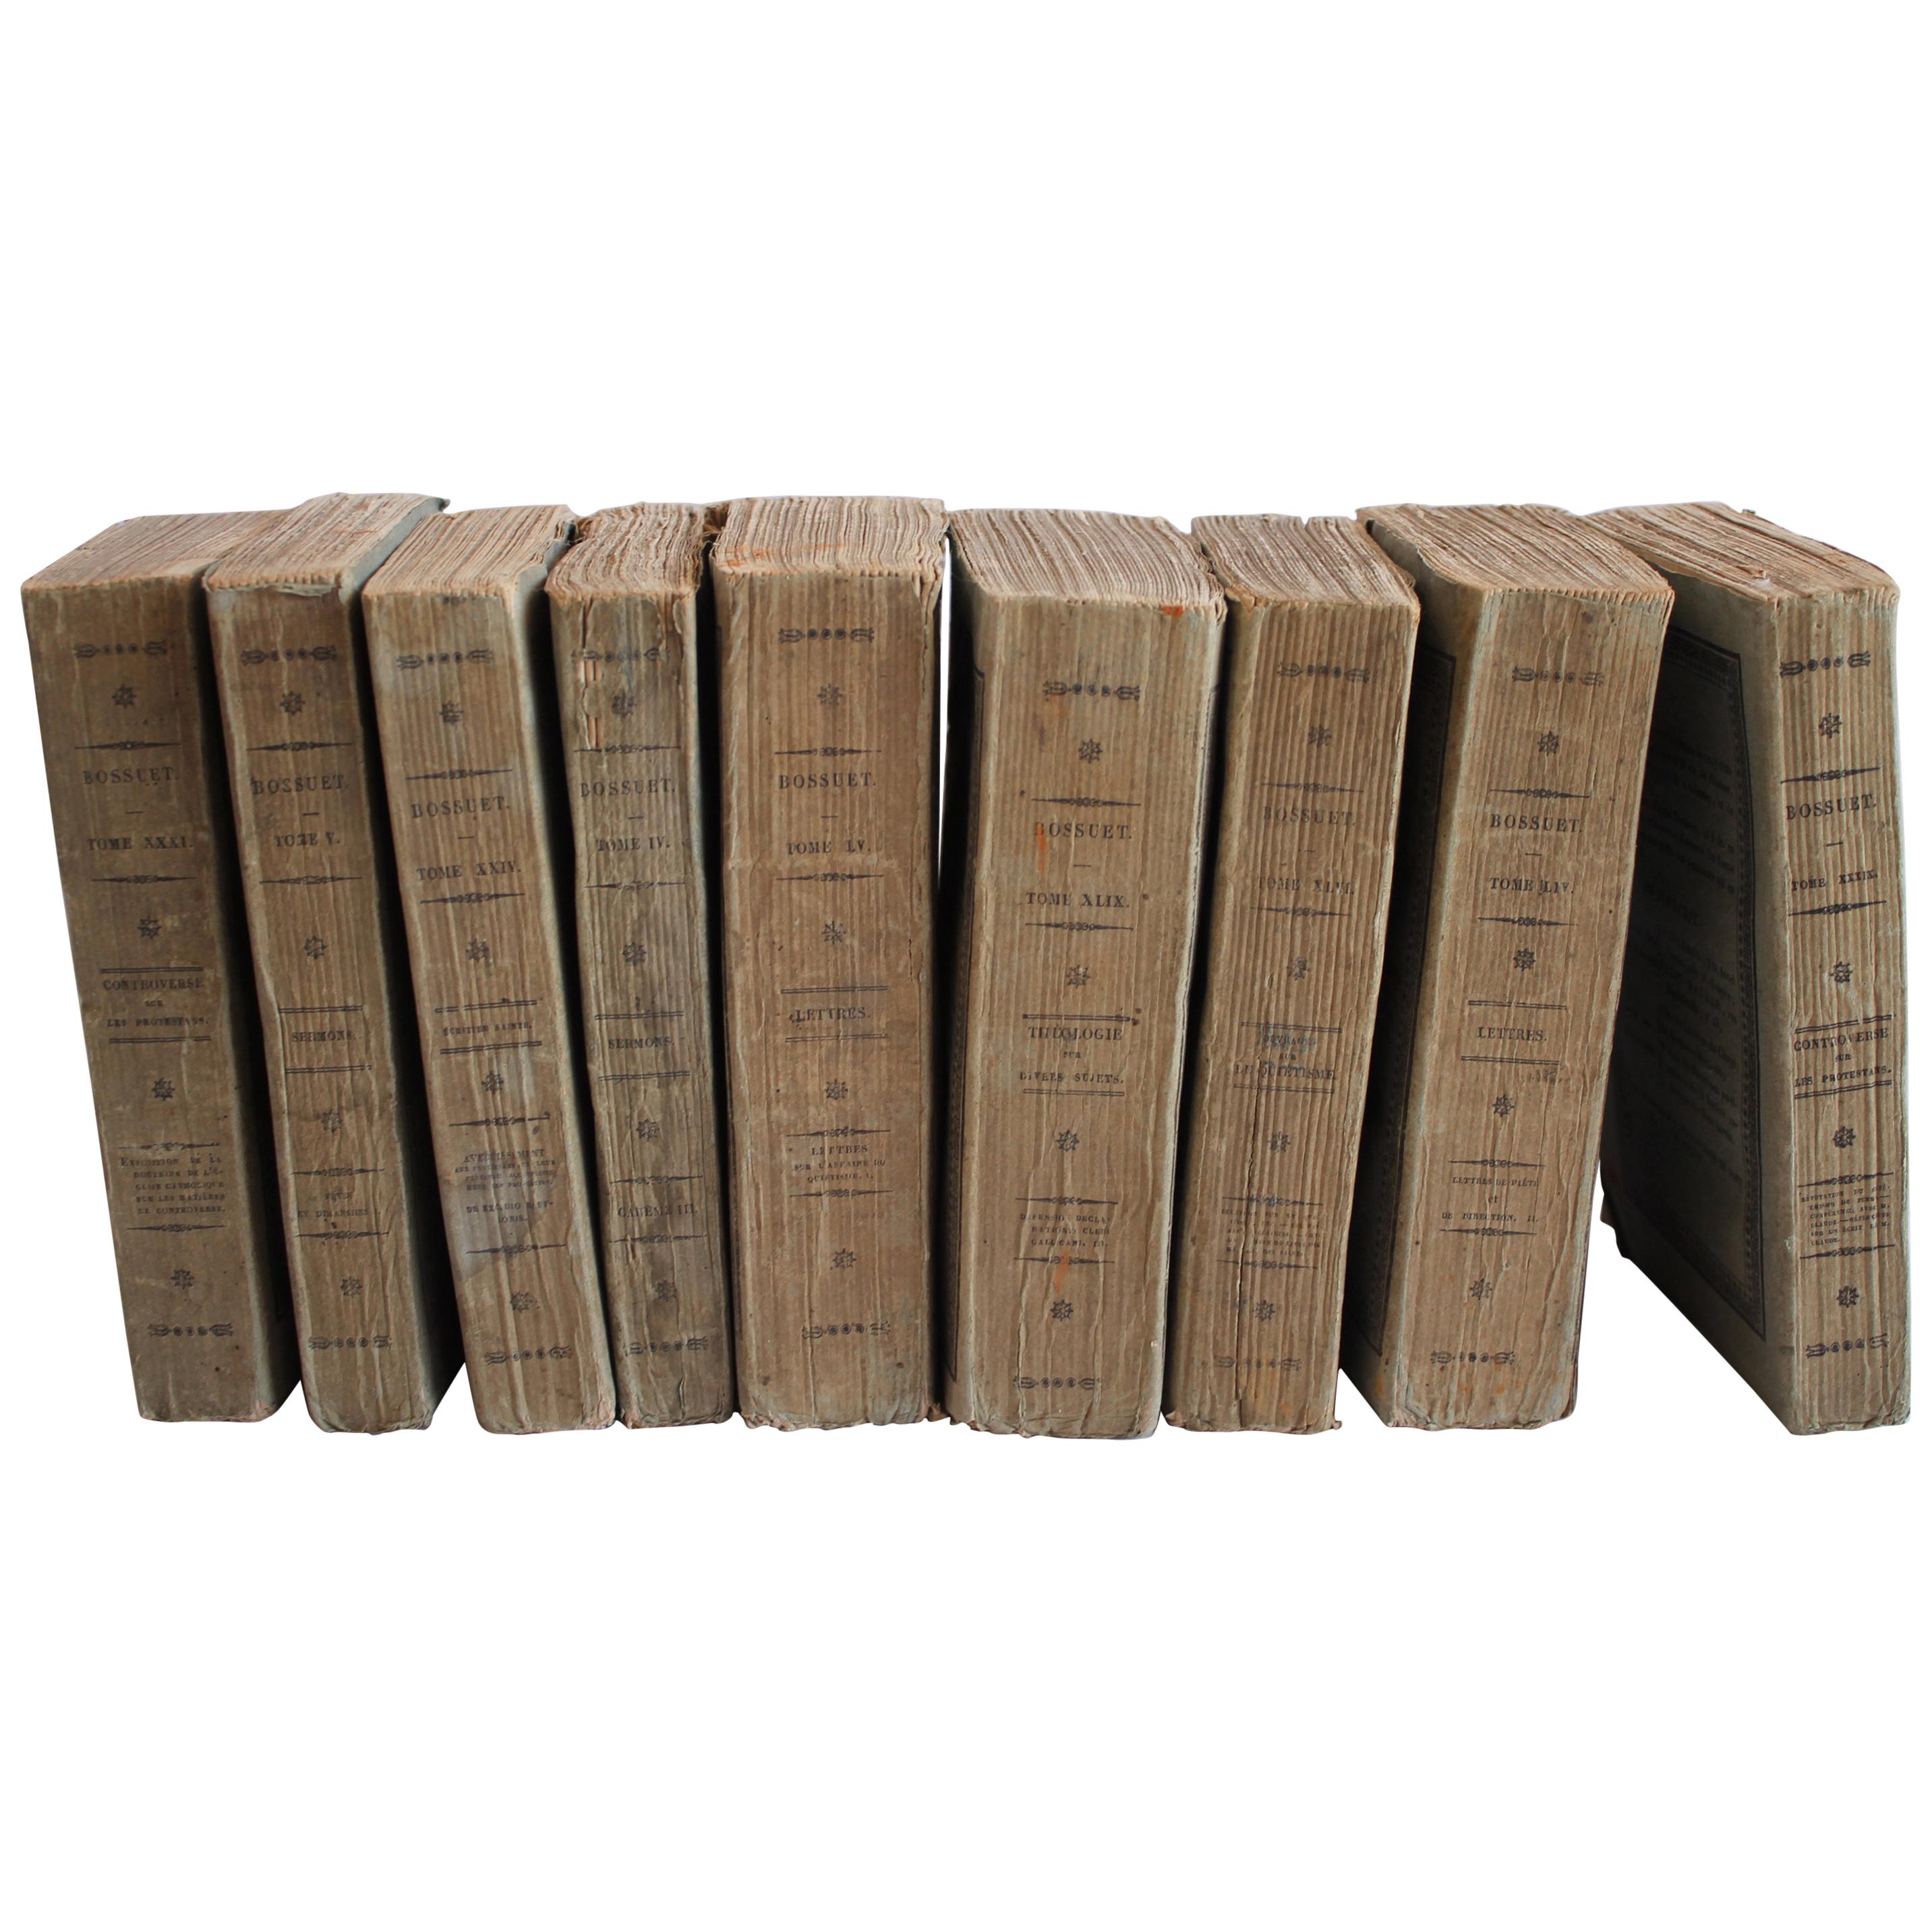 Set of 9 Antique Paper Bound Books Oeuvres de Bossuet